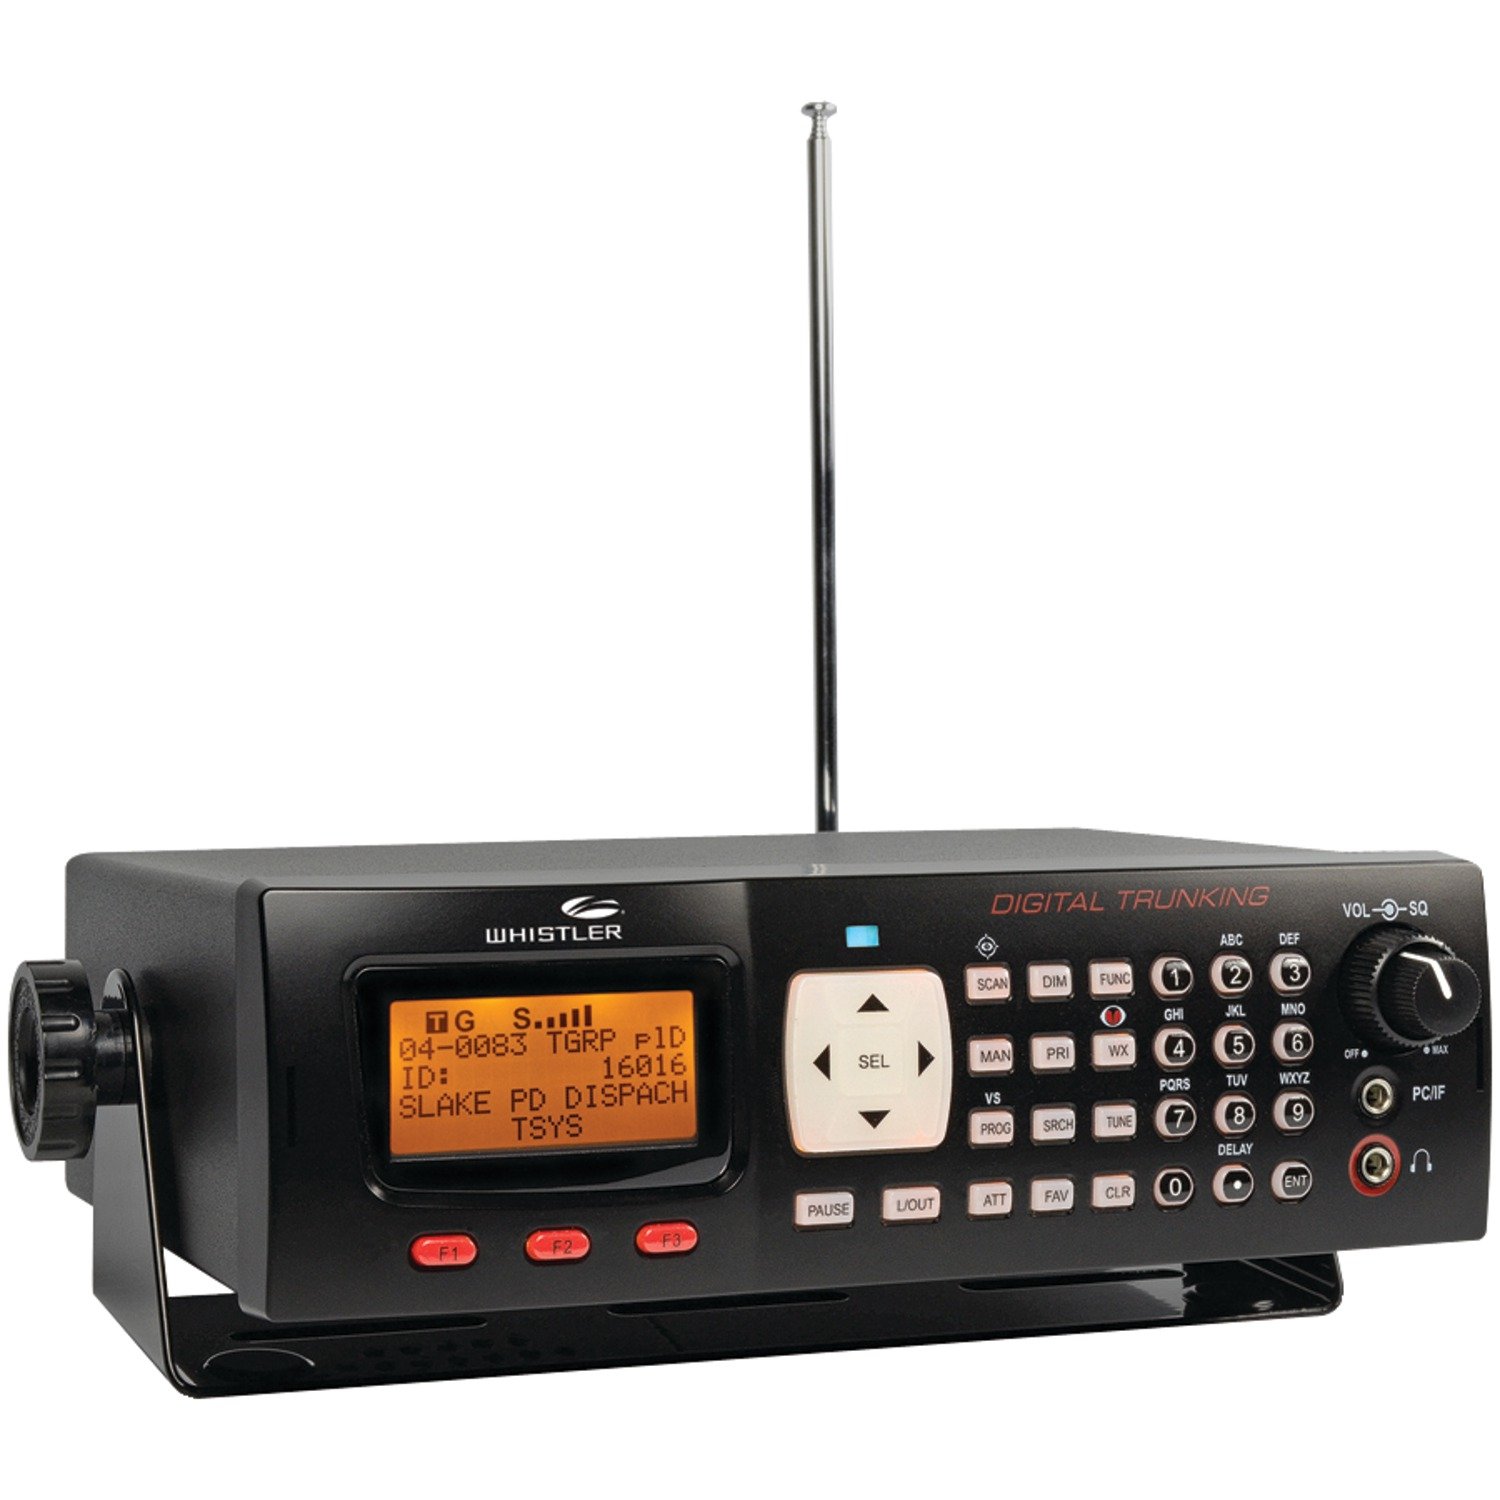 Whistler WS1065 Digital Desktop/Mobile Radio Scanner (Black) $199.25 + Free Shipping